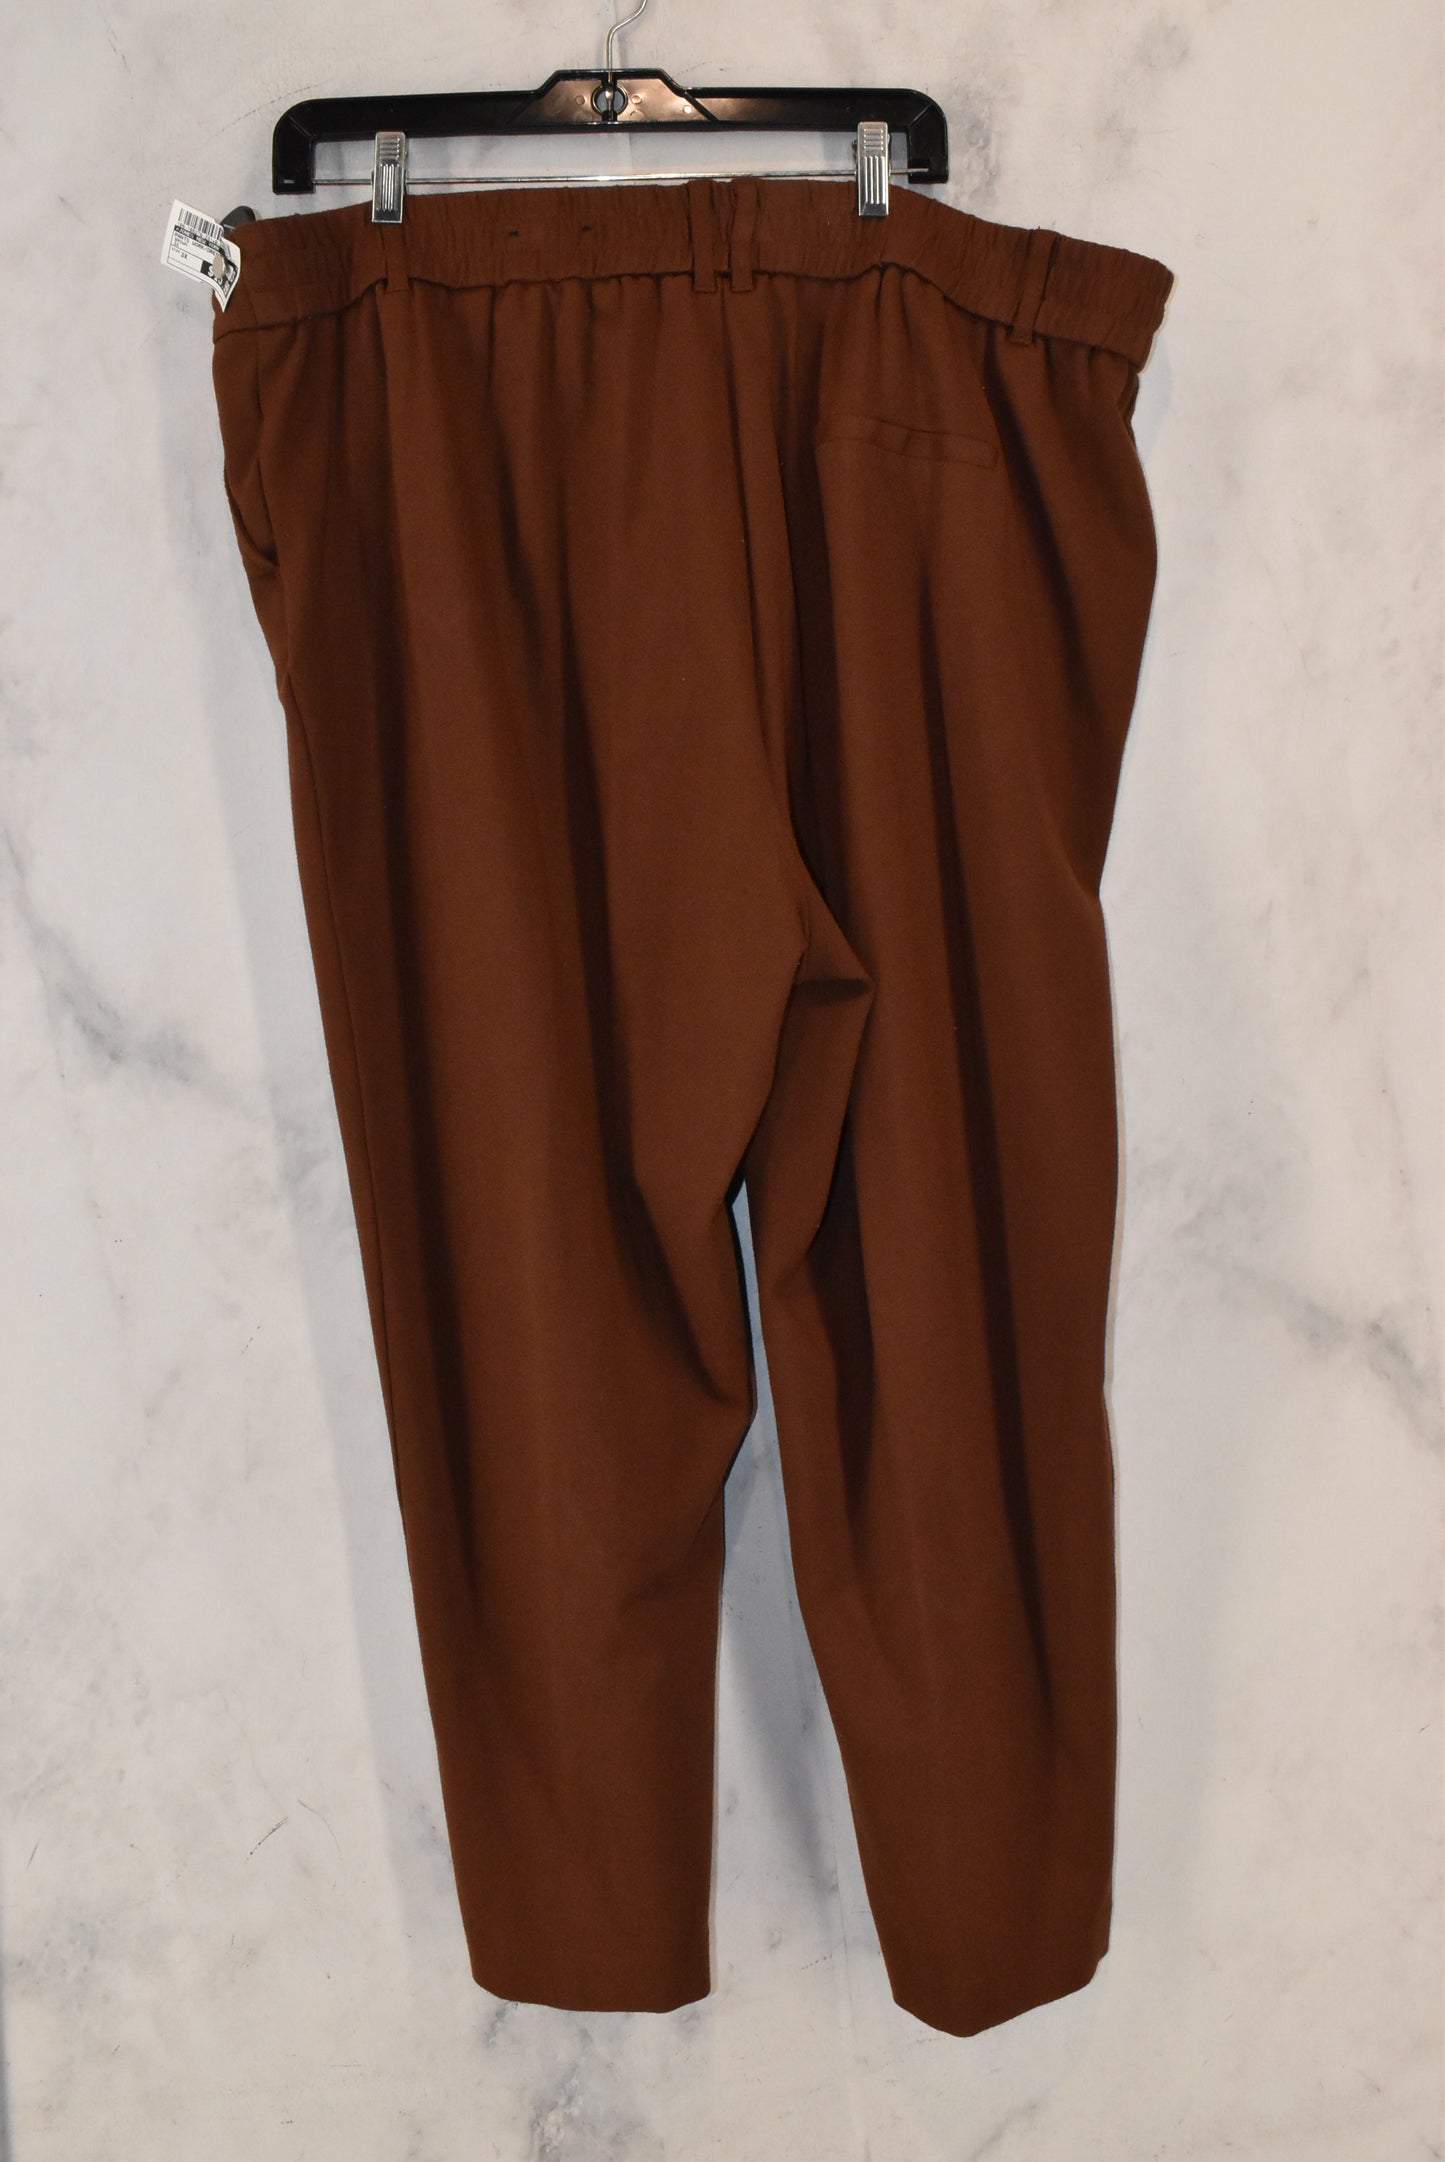 Pants Work/dress By Jones New York  Size: 3x